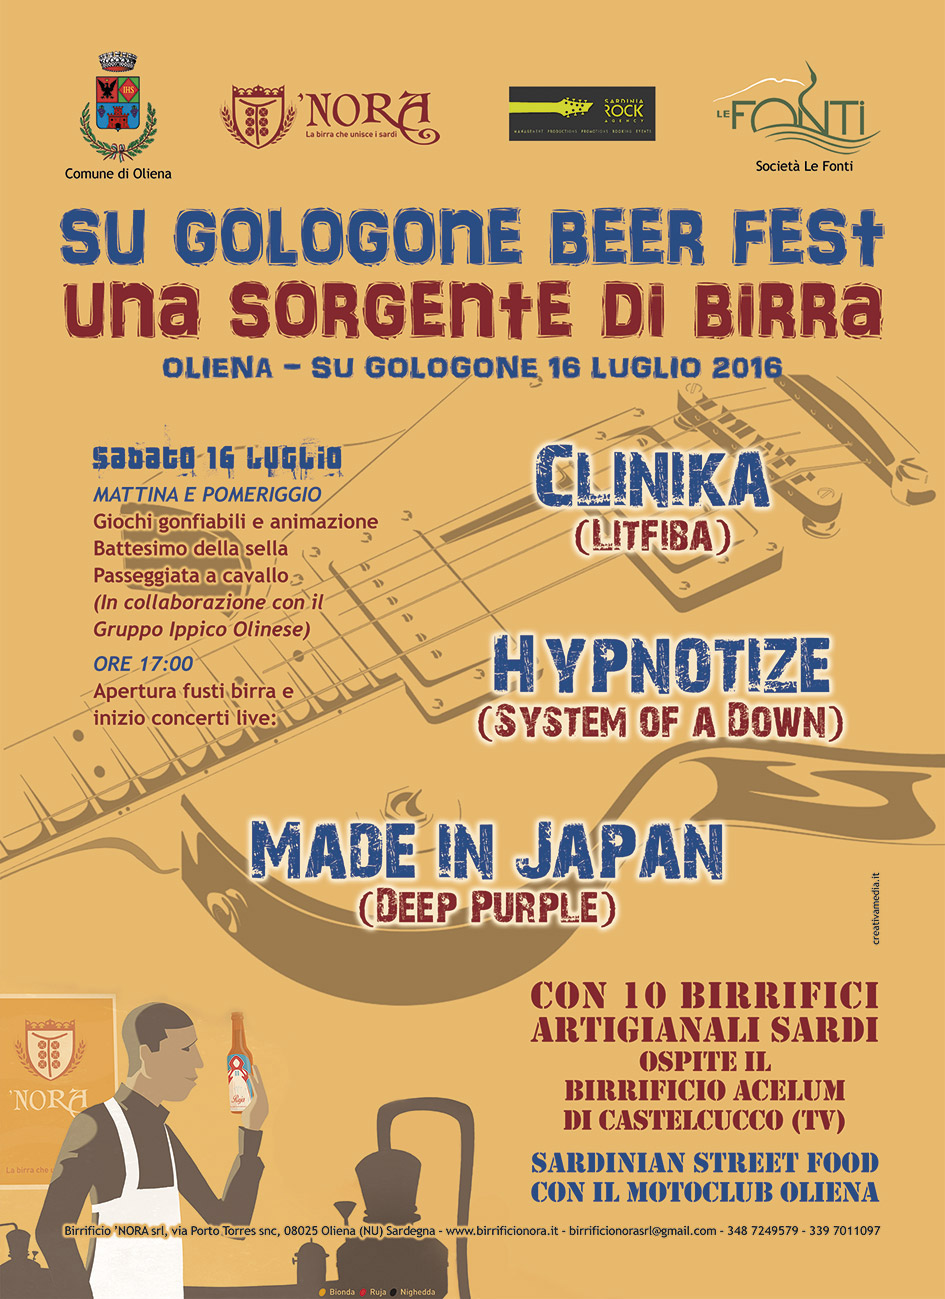 Su Gologone Beer Fest - Una Sorgente di Birra